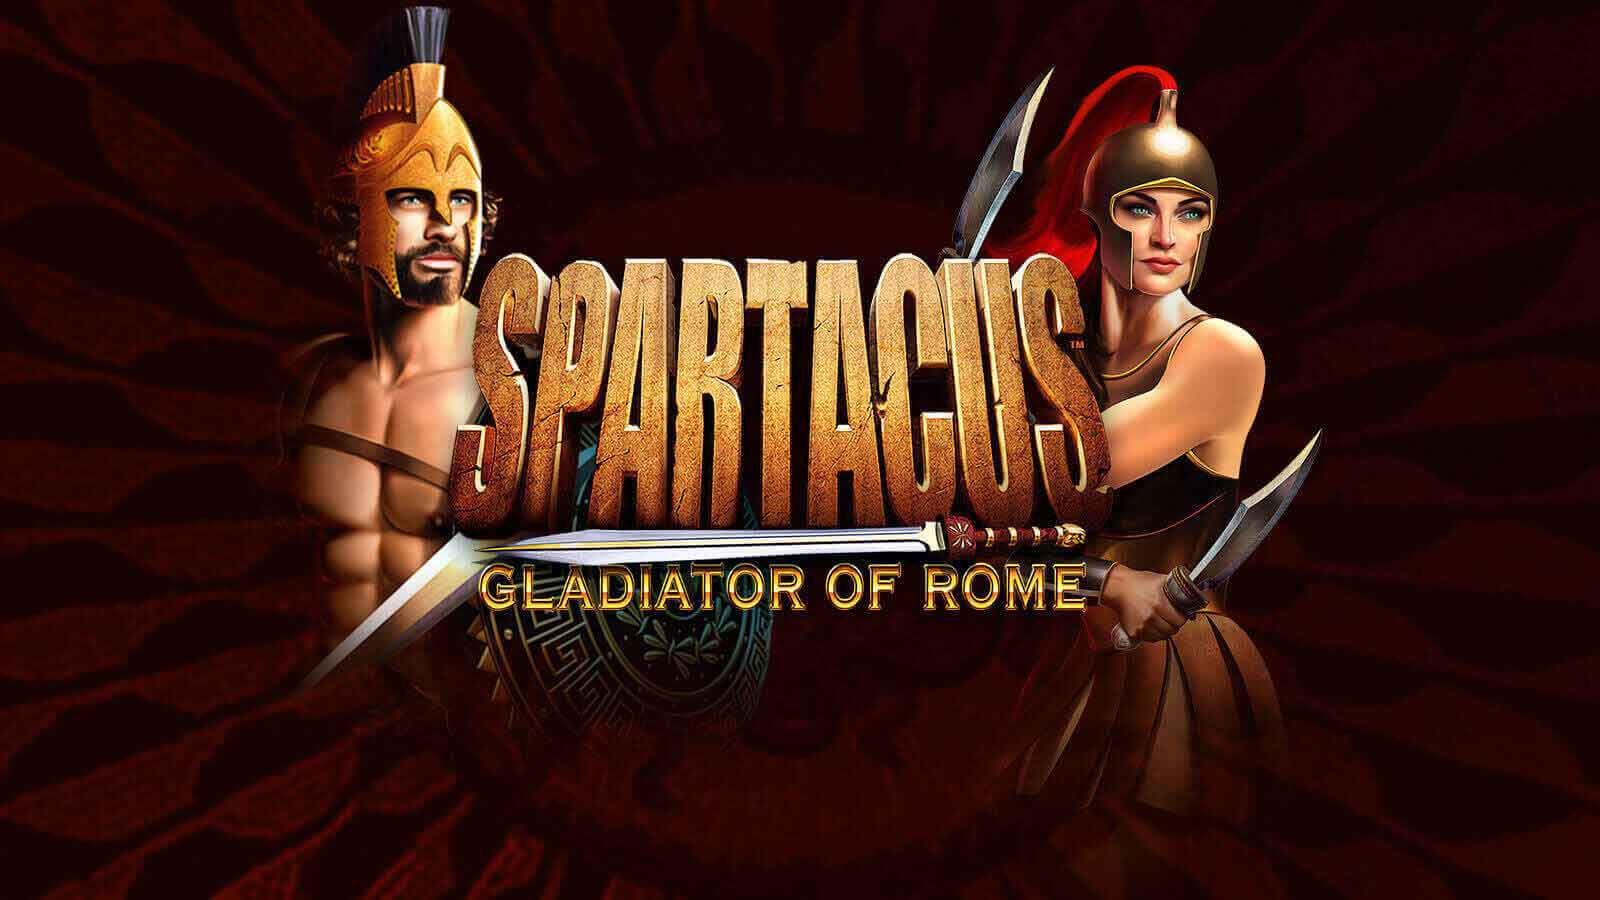 Play Spartacus